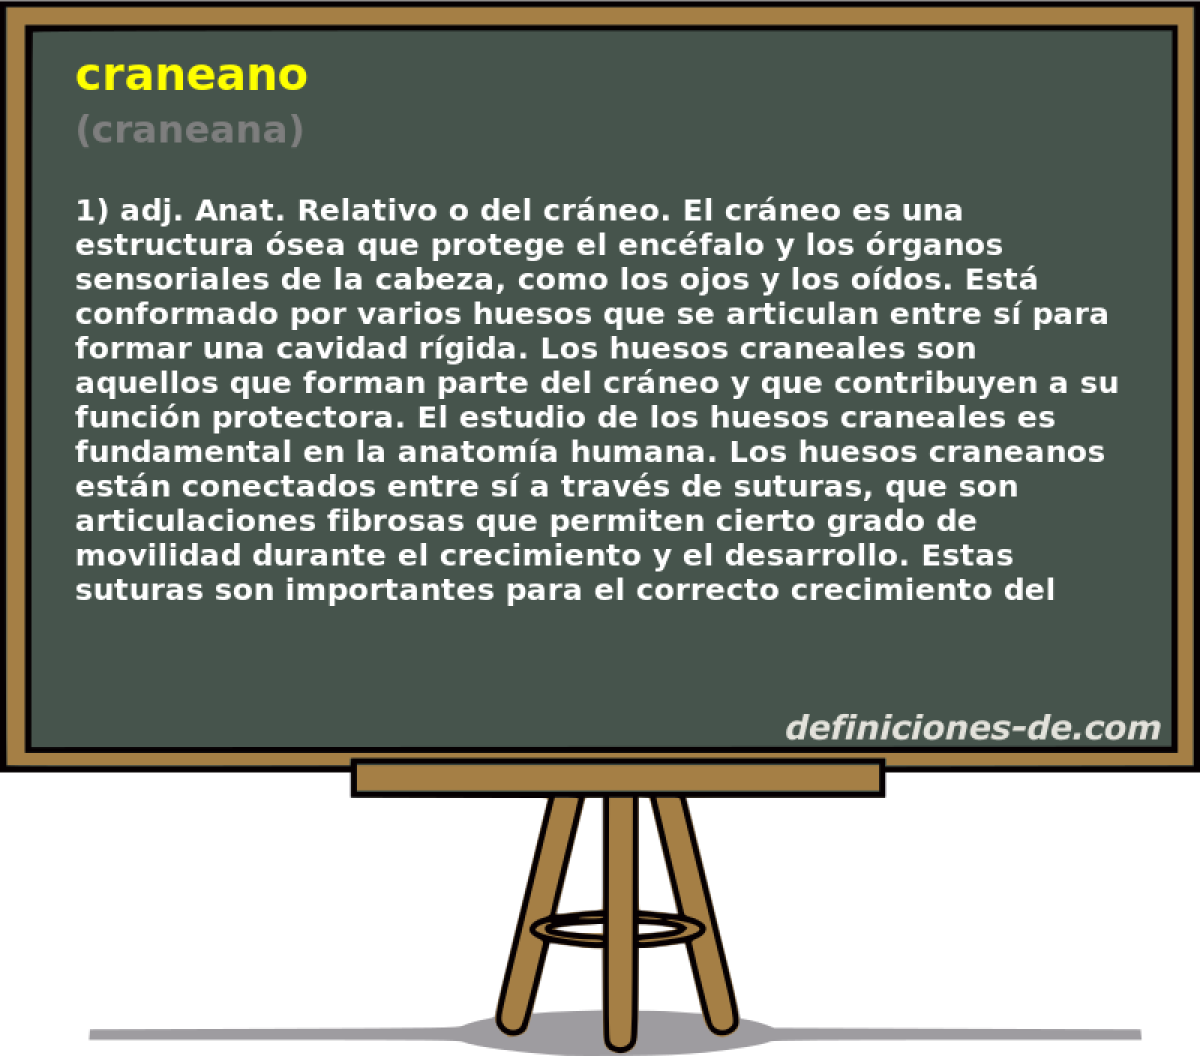 craneano (craneana)